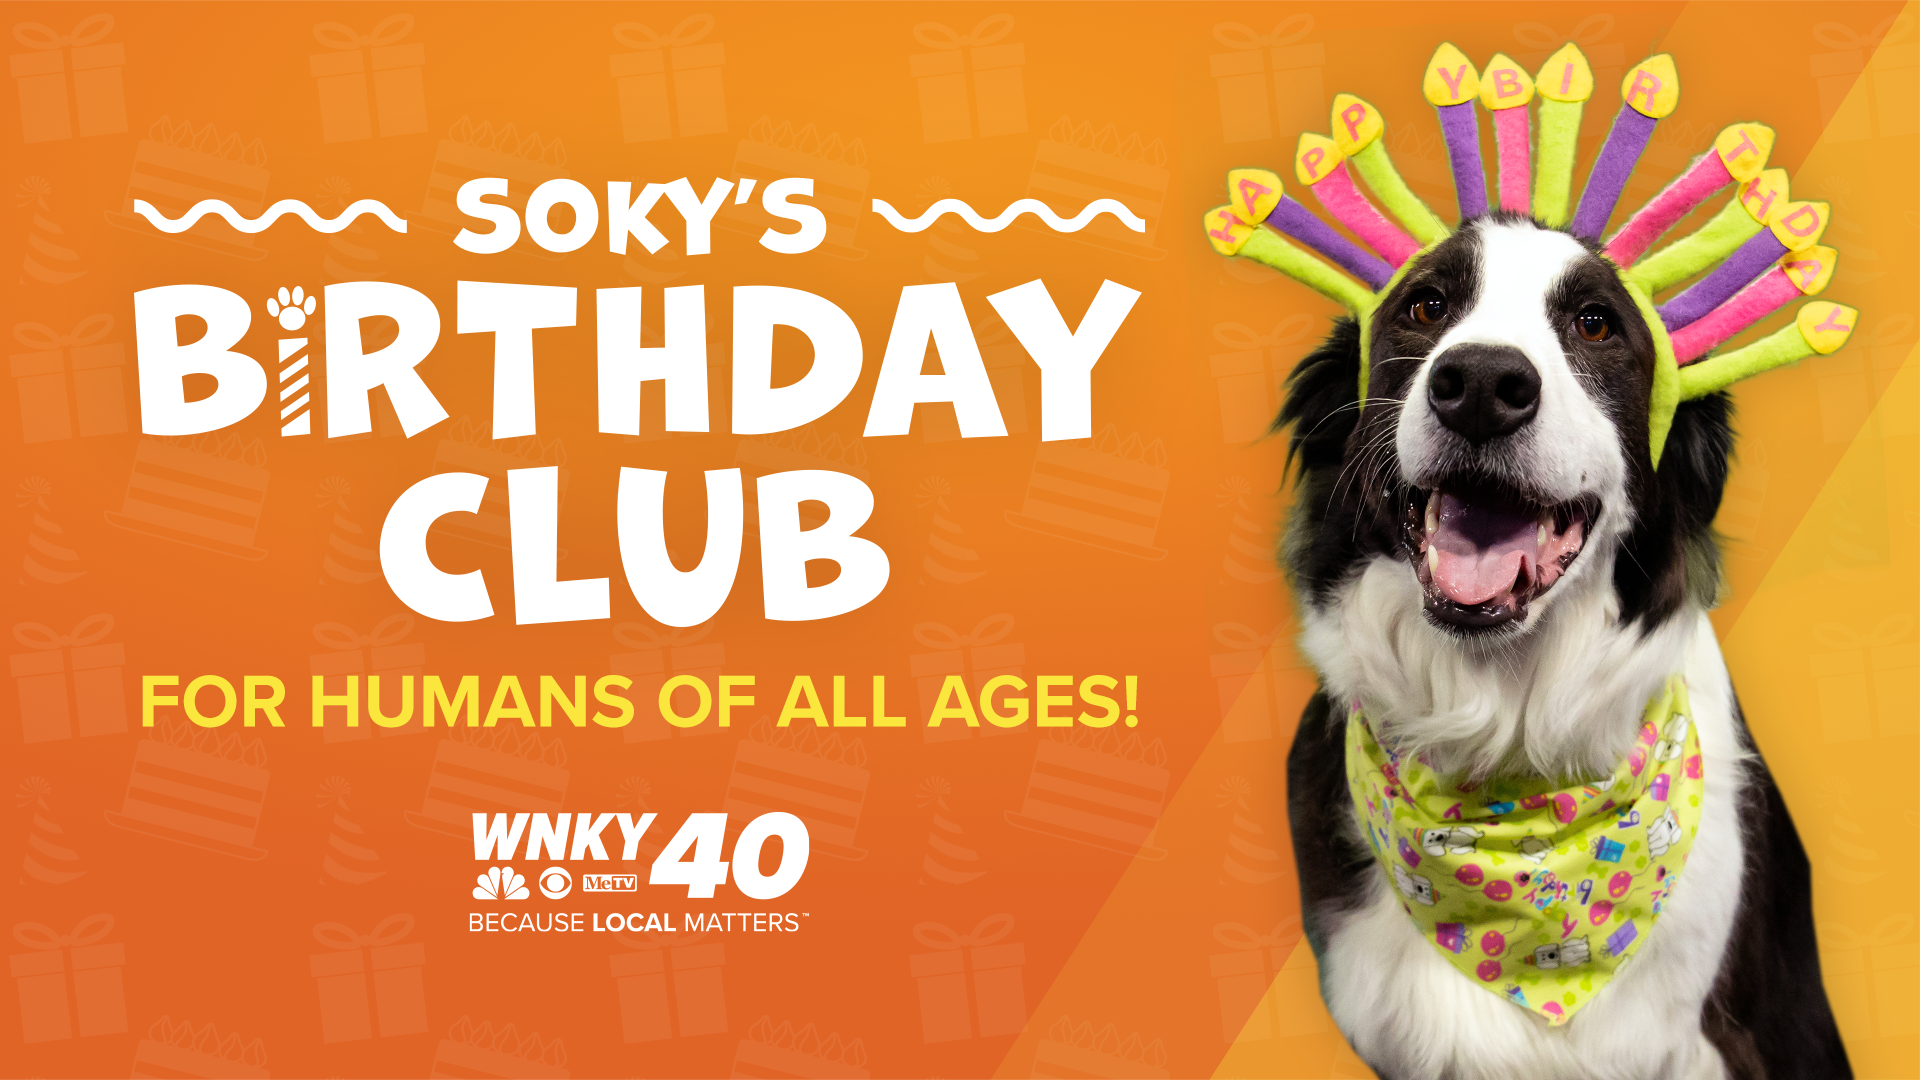 SoKY's Birthday Club - WNKY News 40 Television